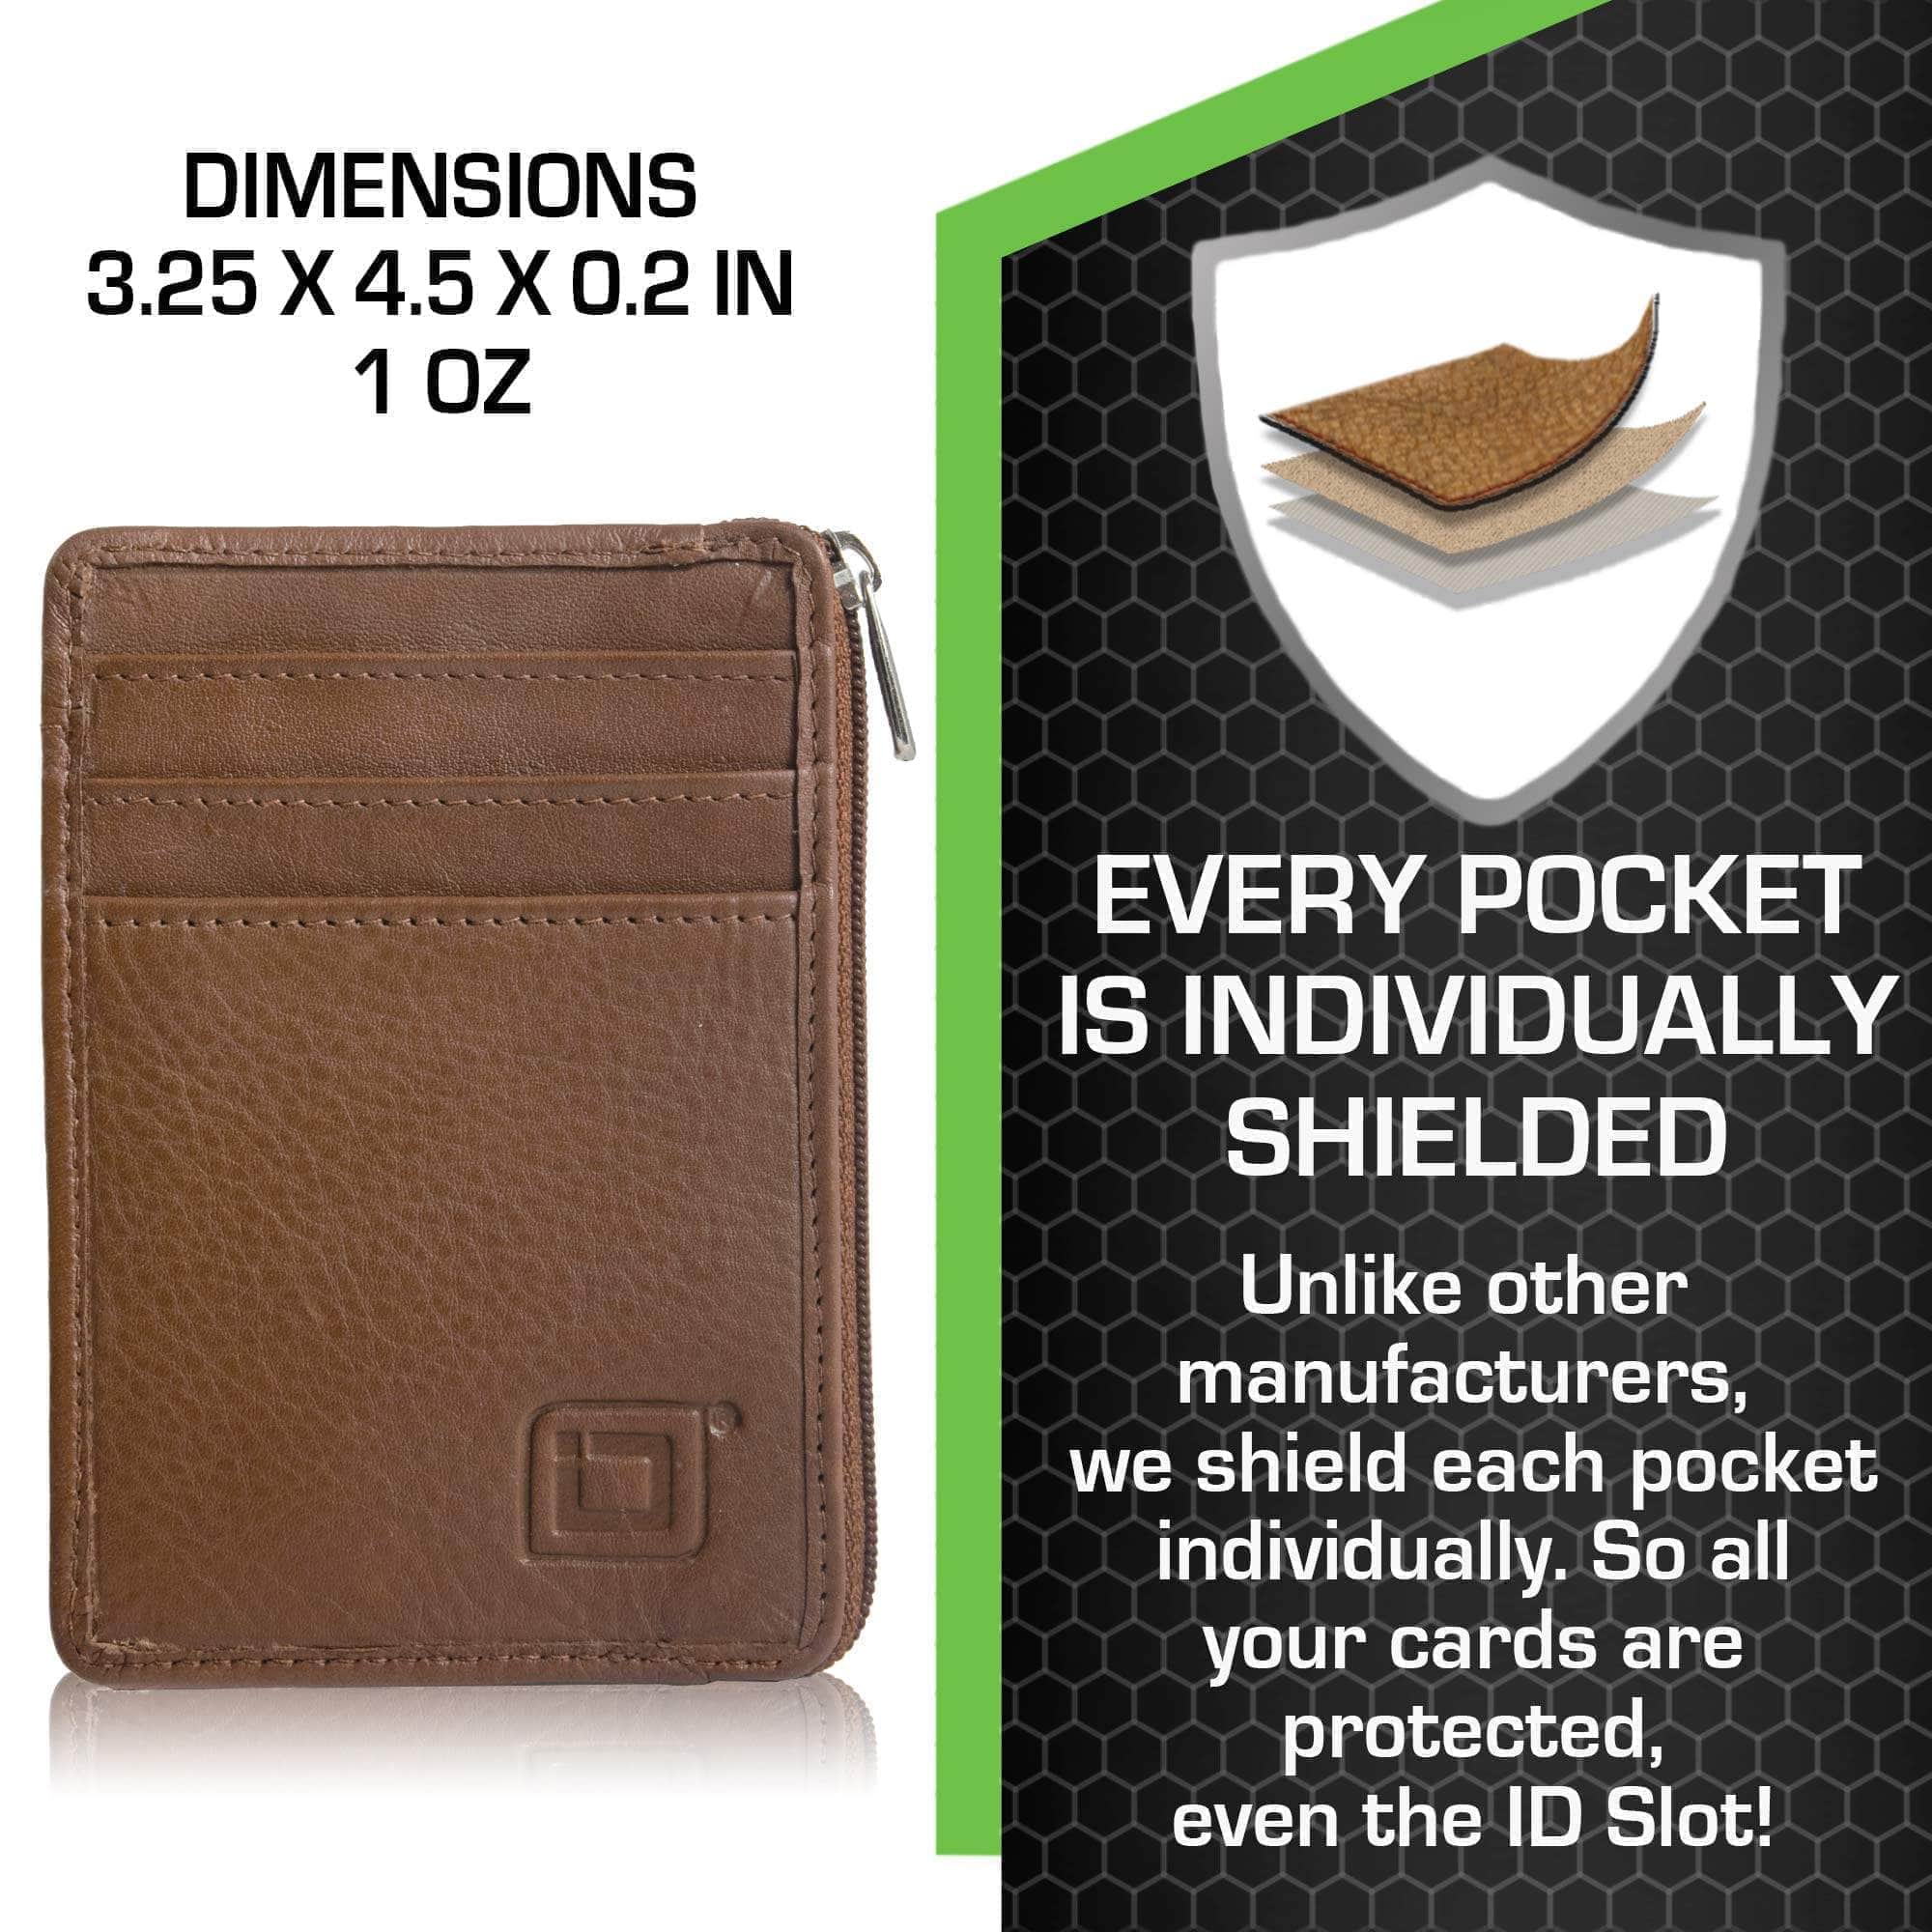 Luxury Men Genuine Leather Thin Wallet Credit Card ID Holder Purse Mini  Wallet